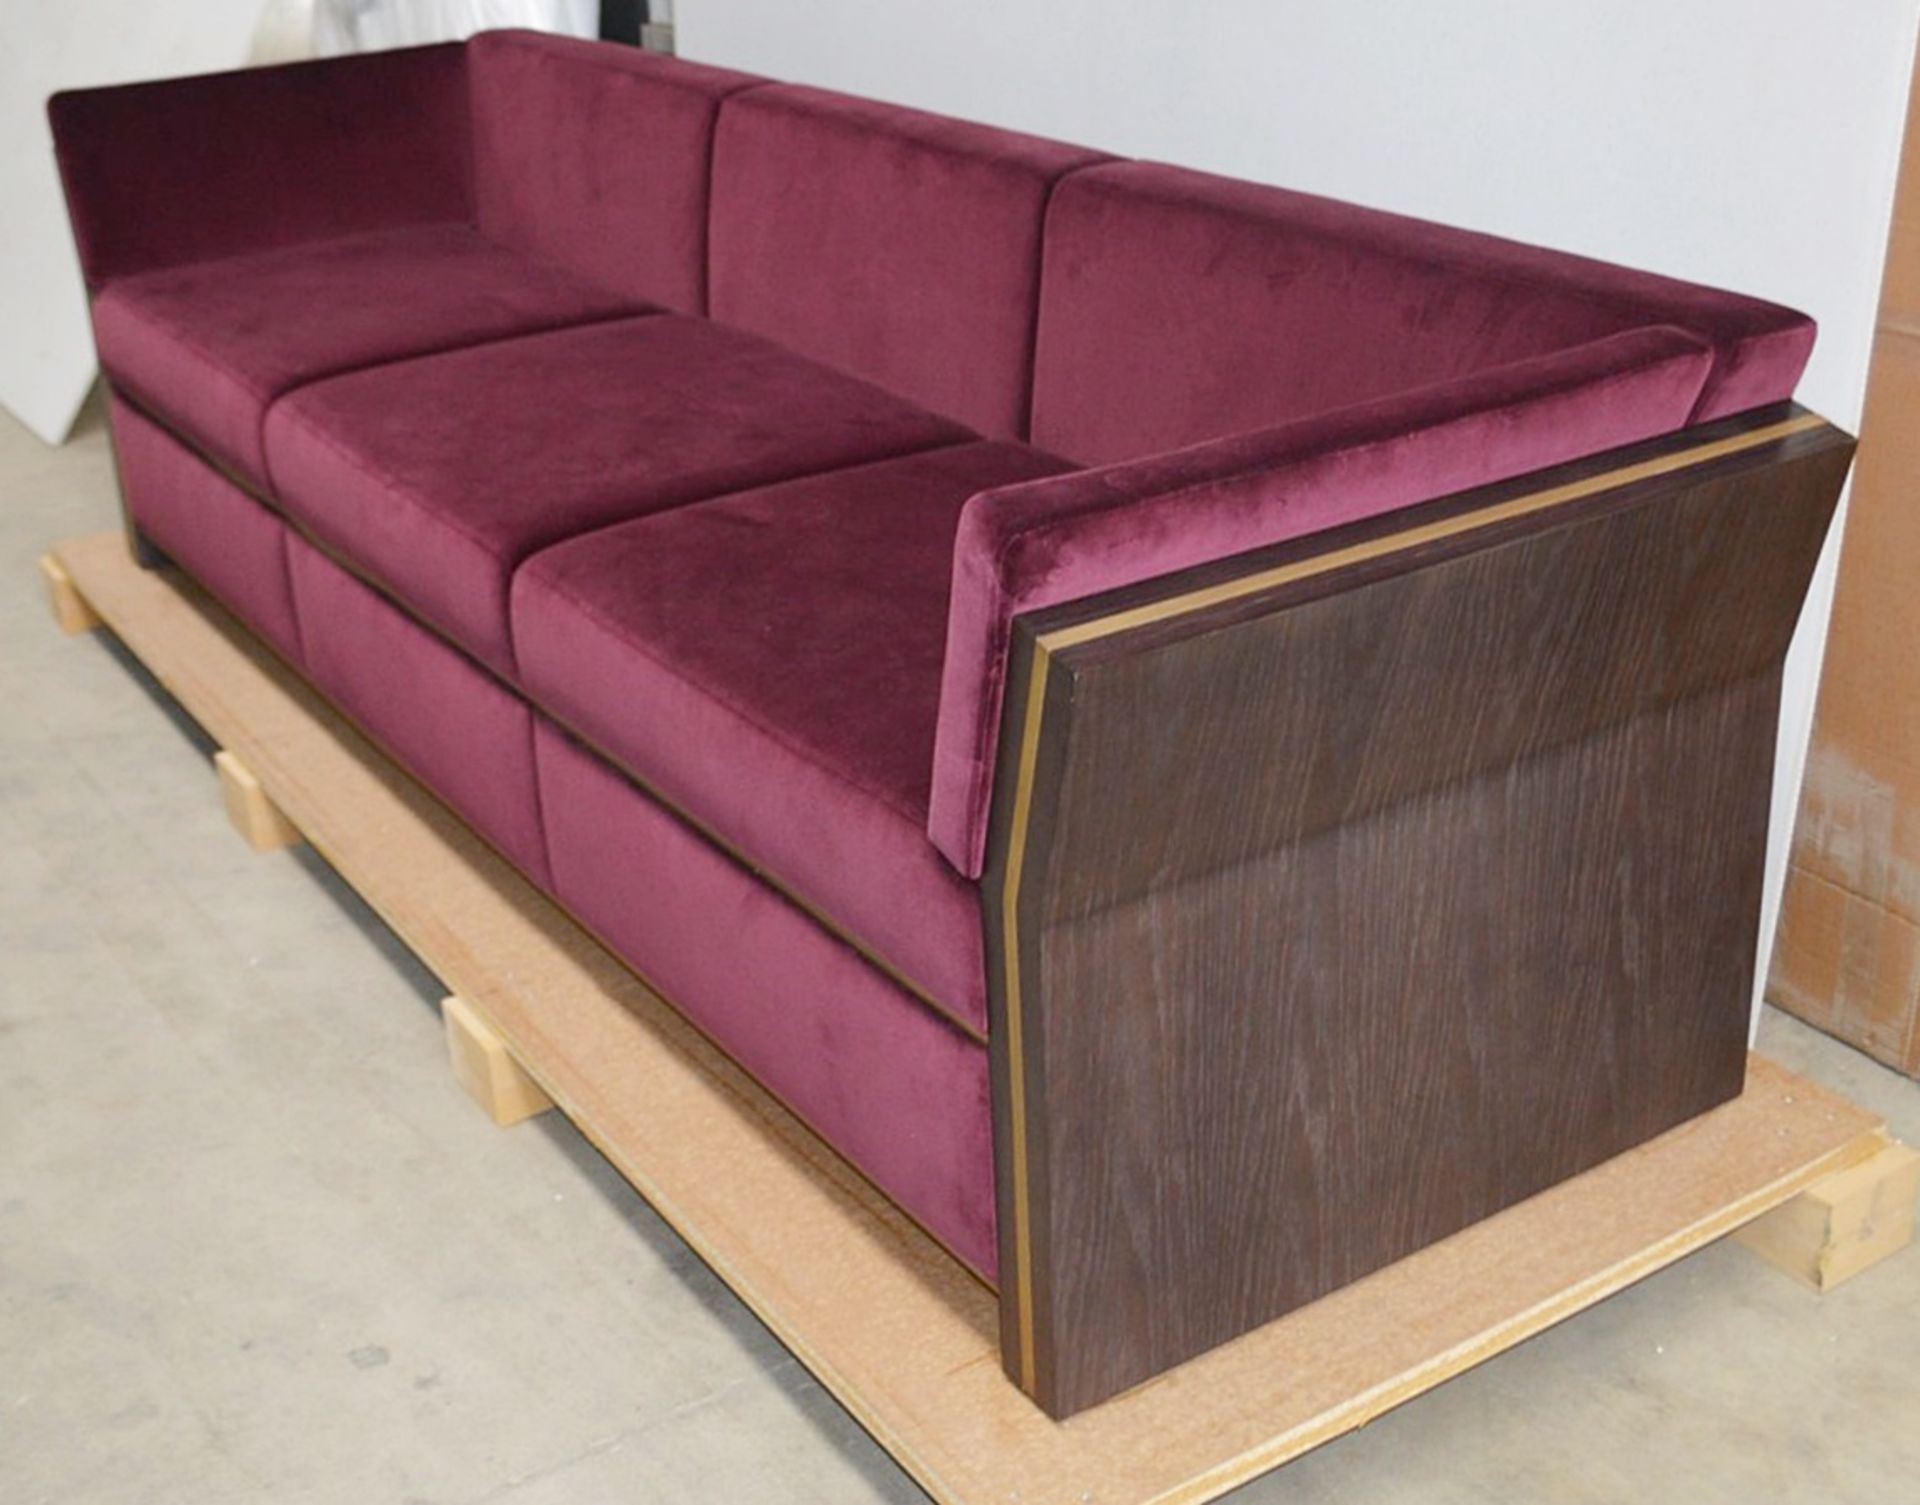 1 x FRATO 'Udaipur' 3 Seater Sofa With Custom Burgundy Velvet Upholstery - Original RRP £8,040 - Image 3 of 8